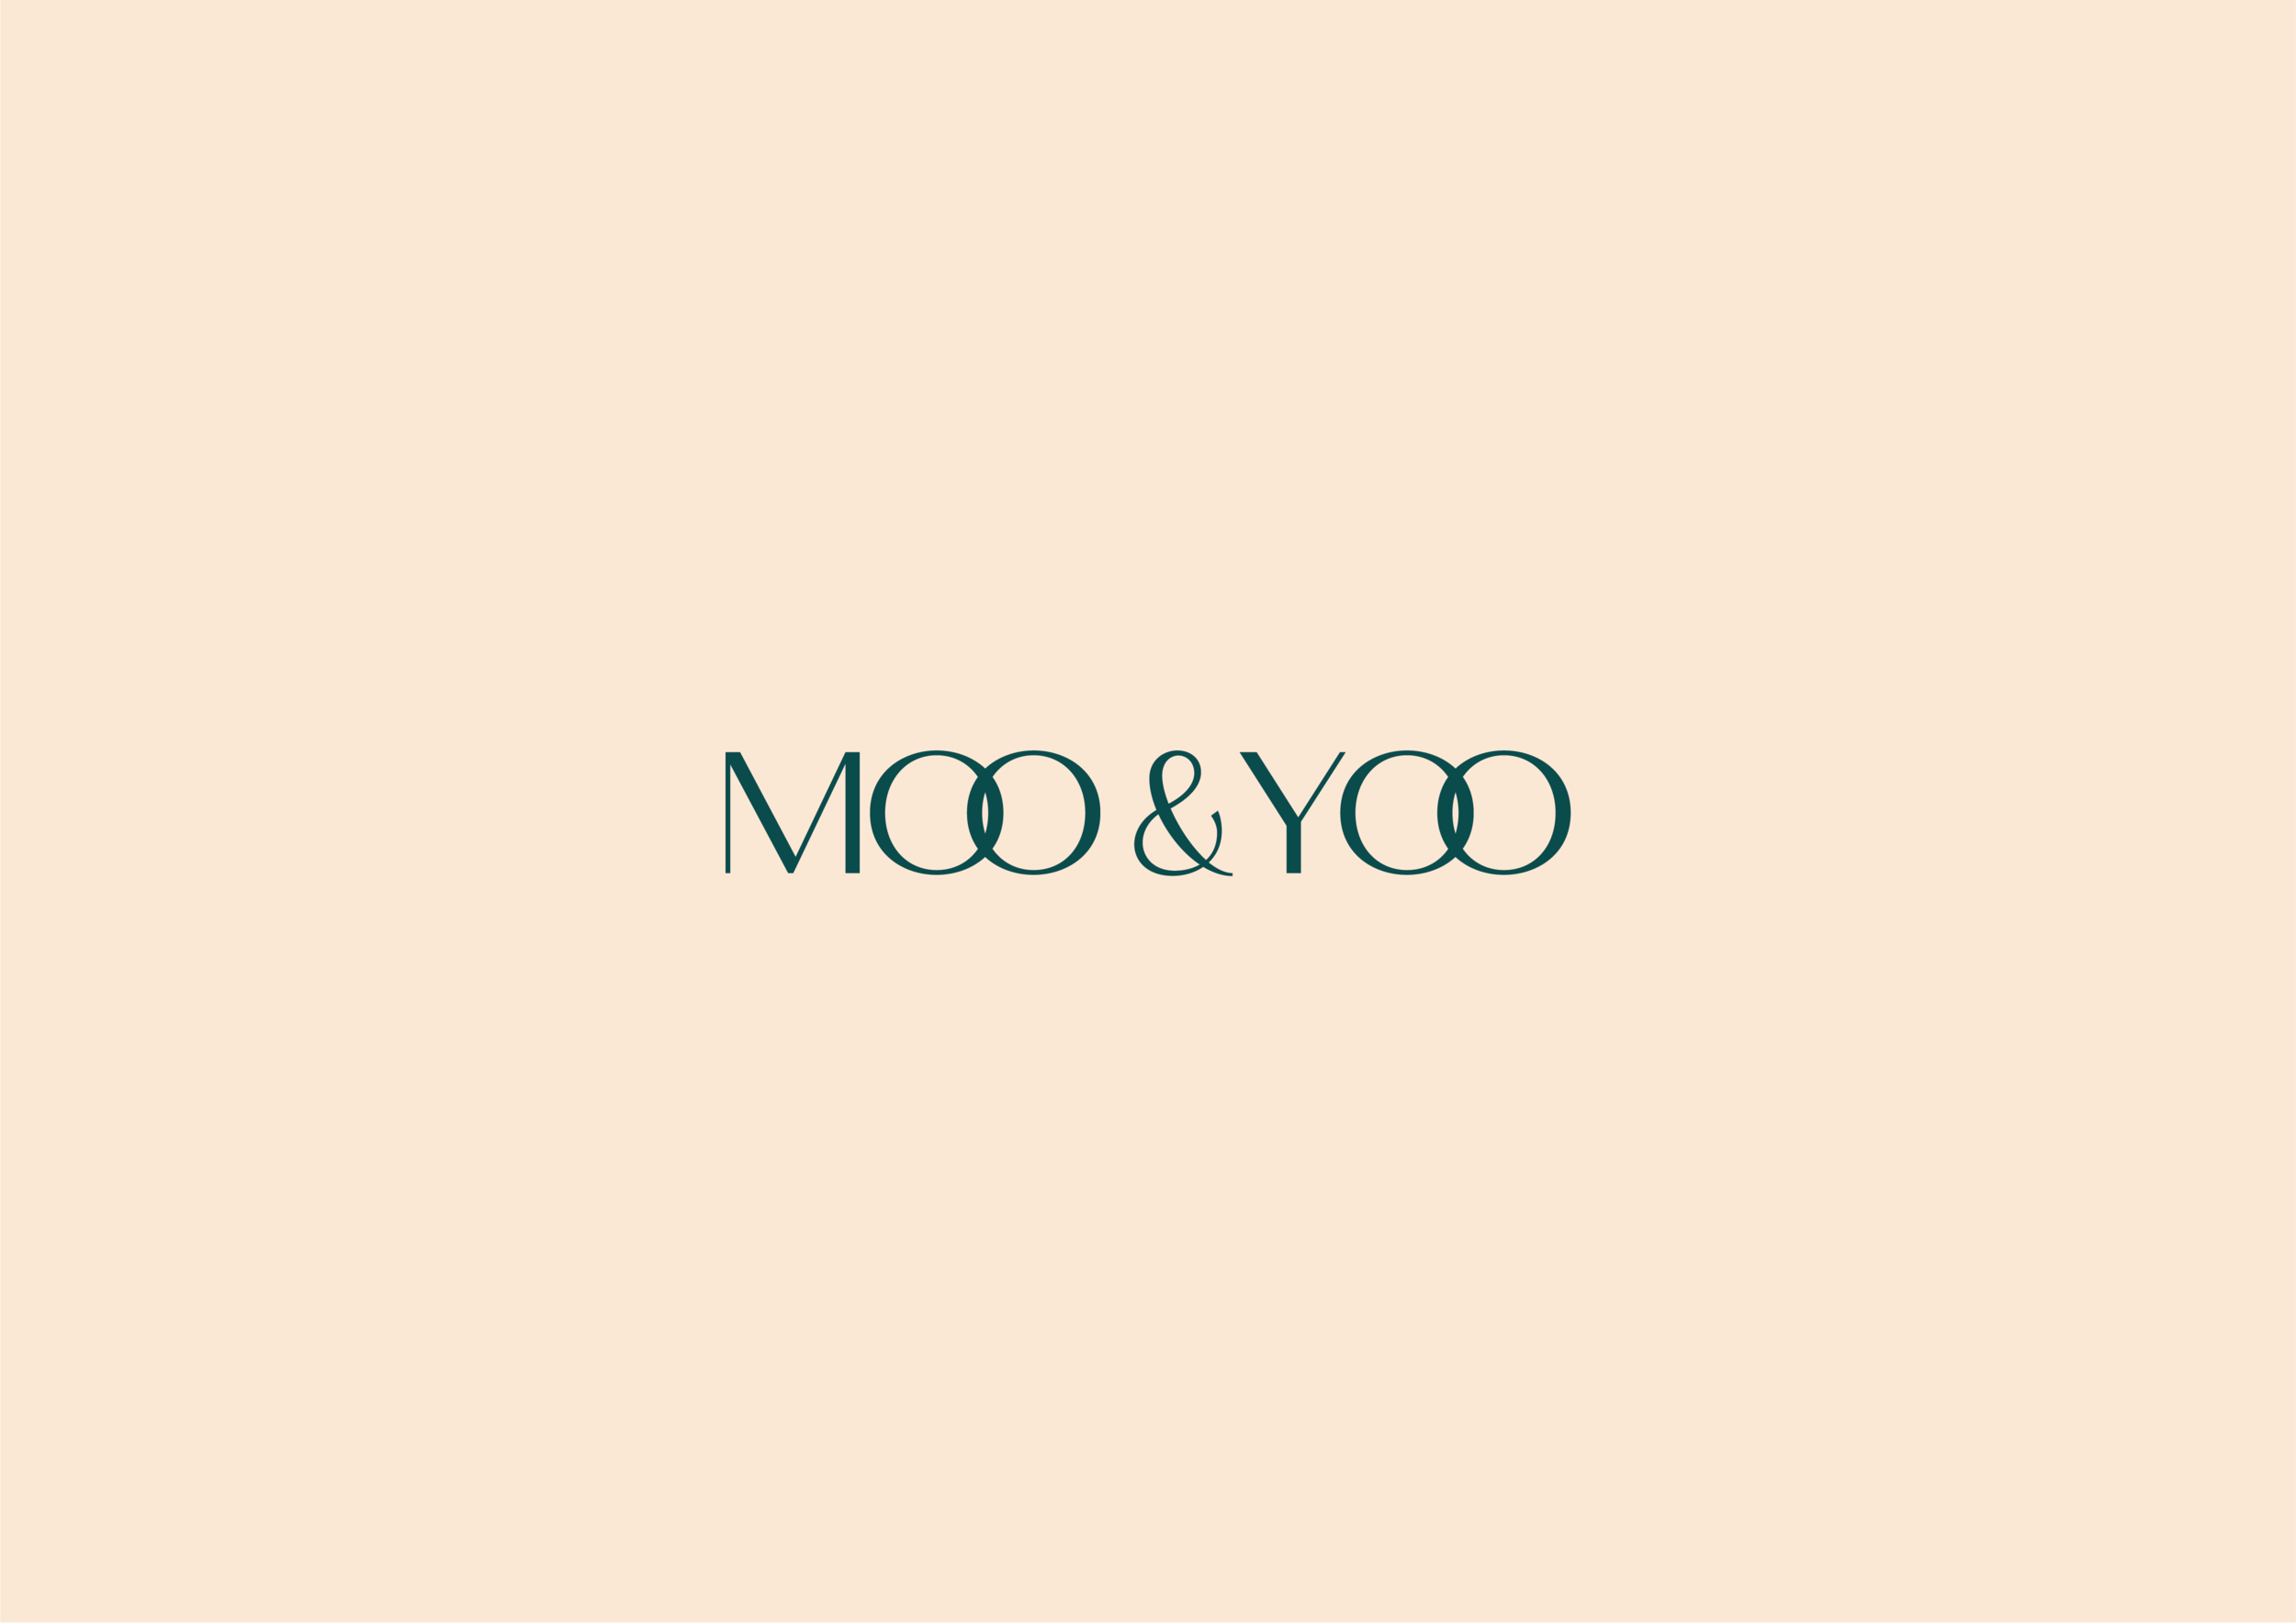 Branding design company UK. Moo &amp; Yoo company font logo with beige background